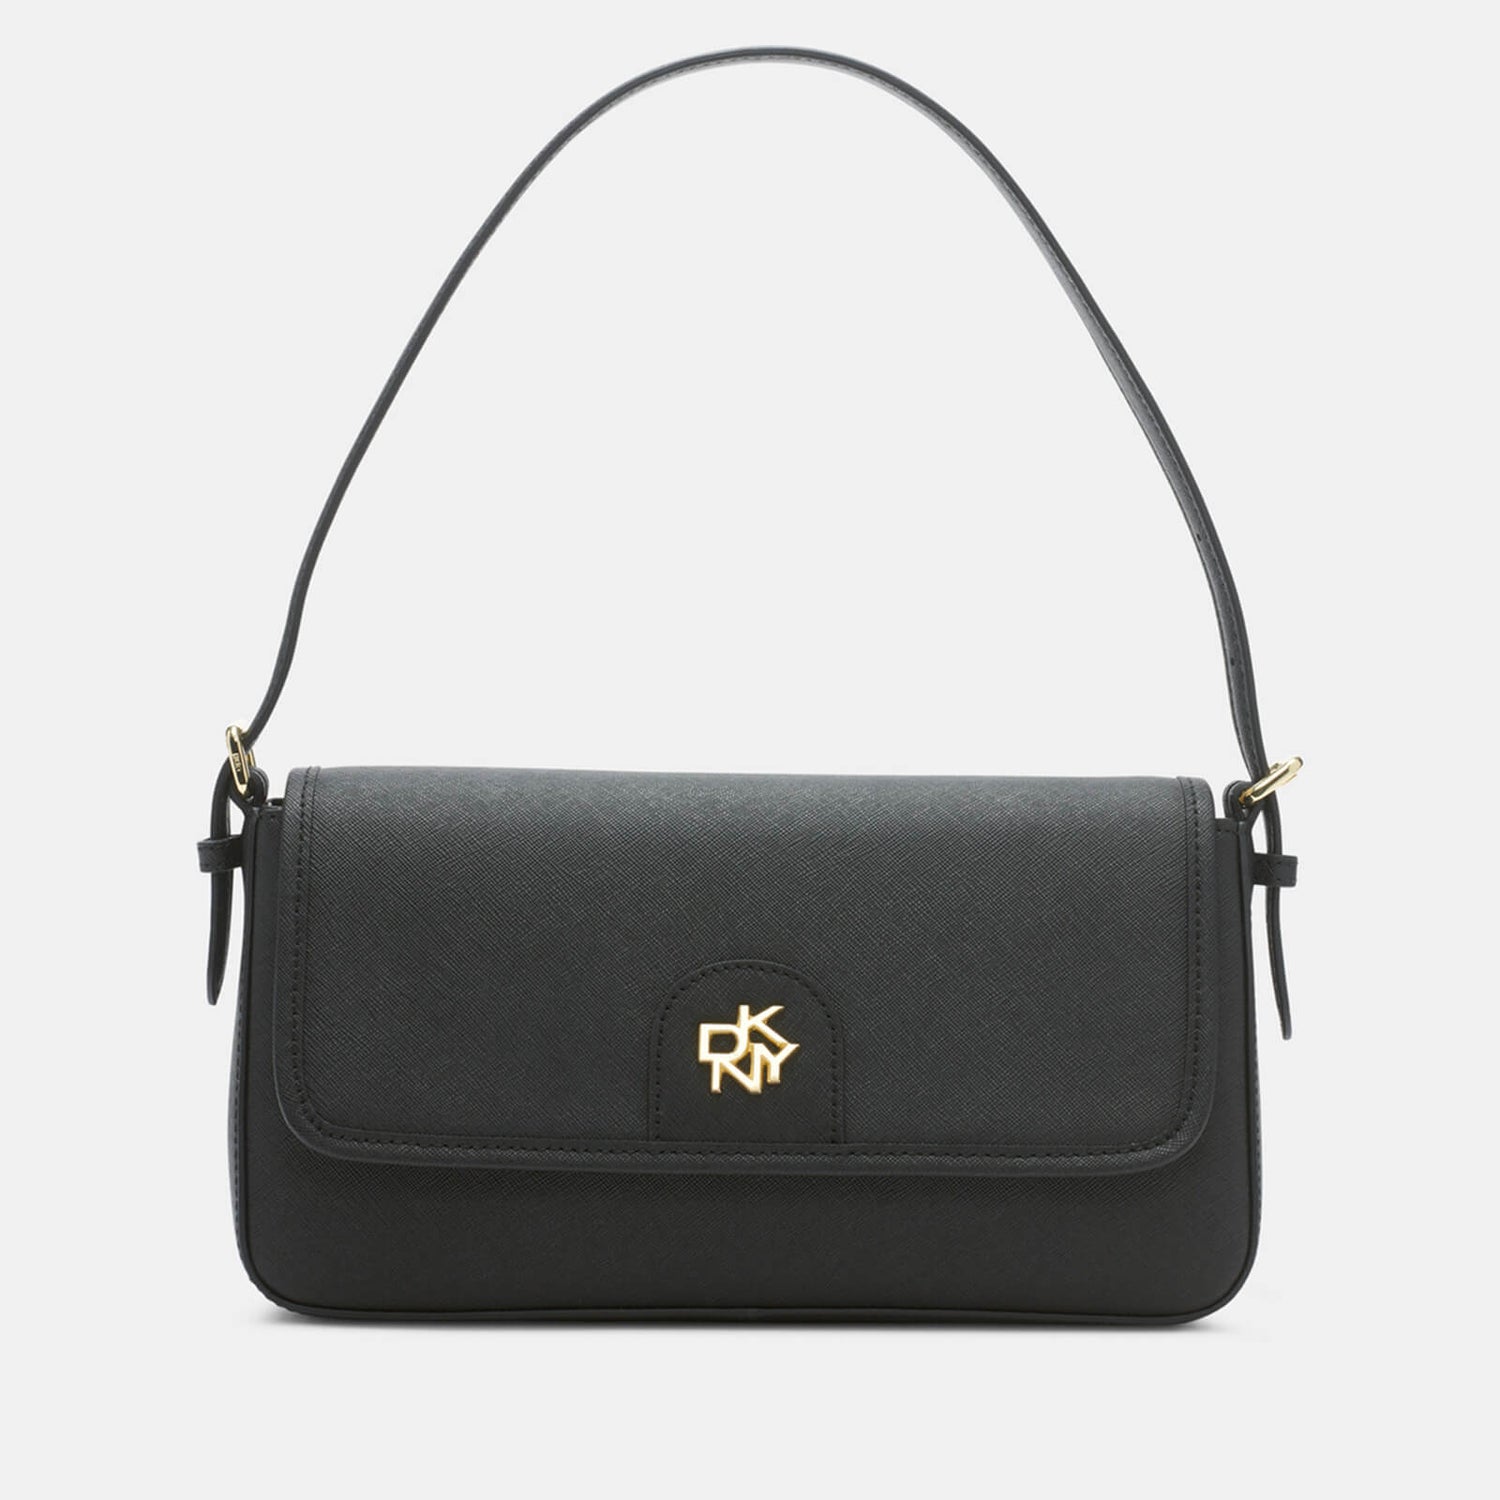 DKNY Women's Carol Shoulder Bag - Black/Gold | TheHut.com